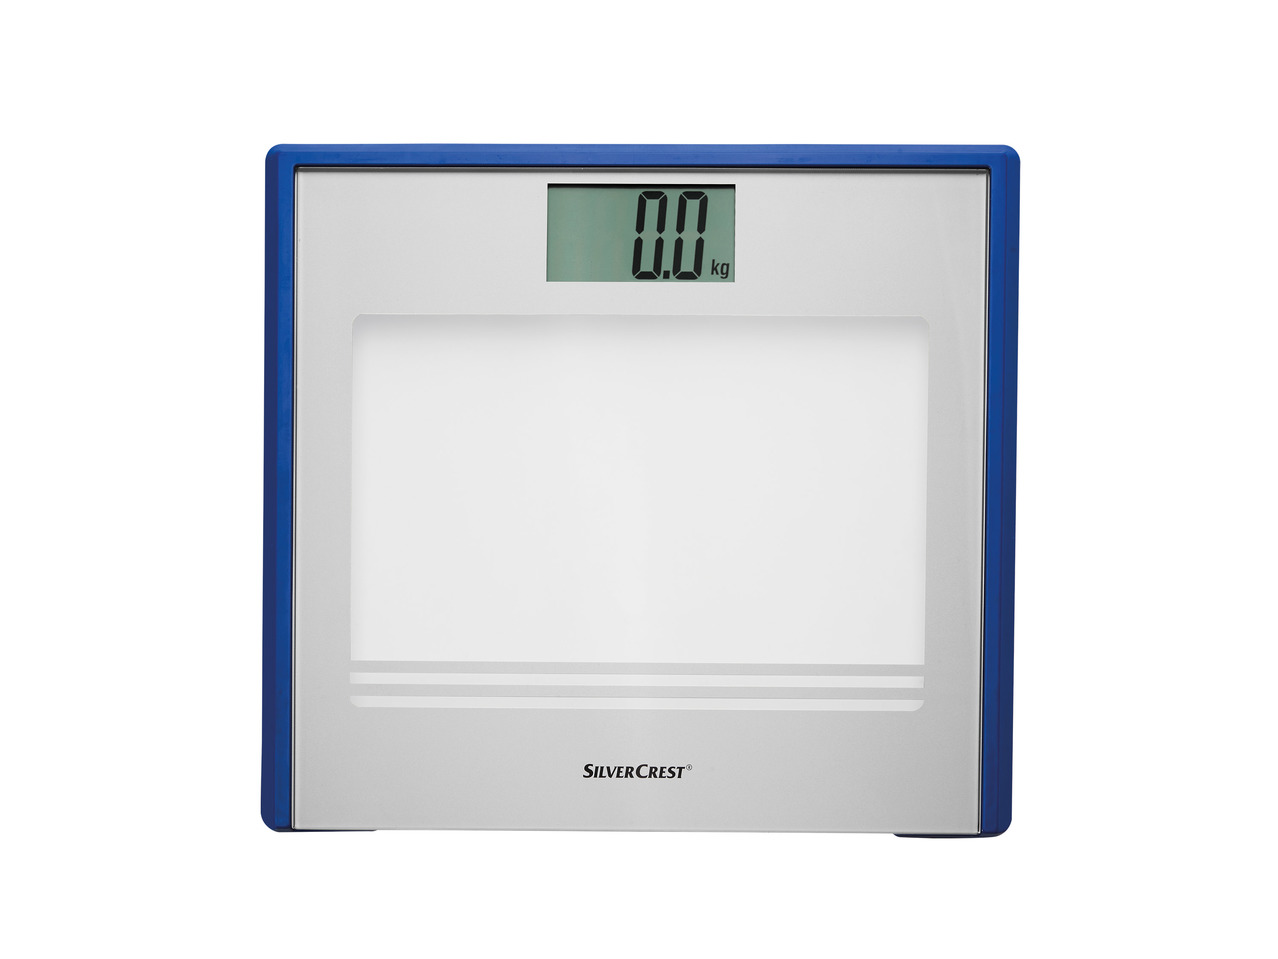 Silvercrest Bathroom Scales1